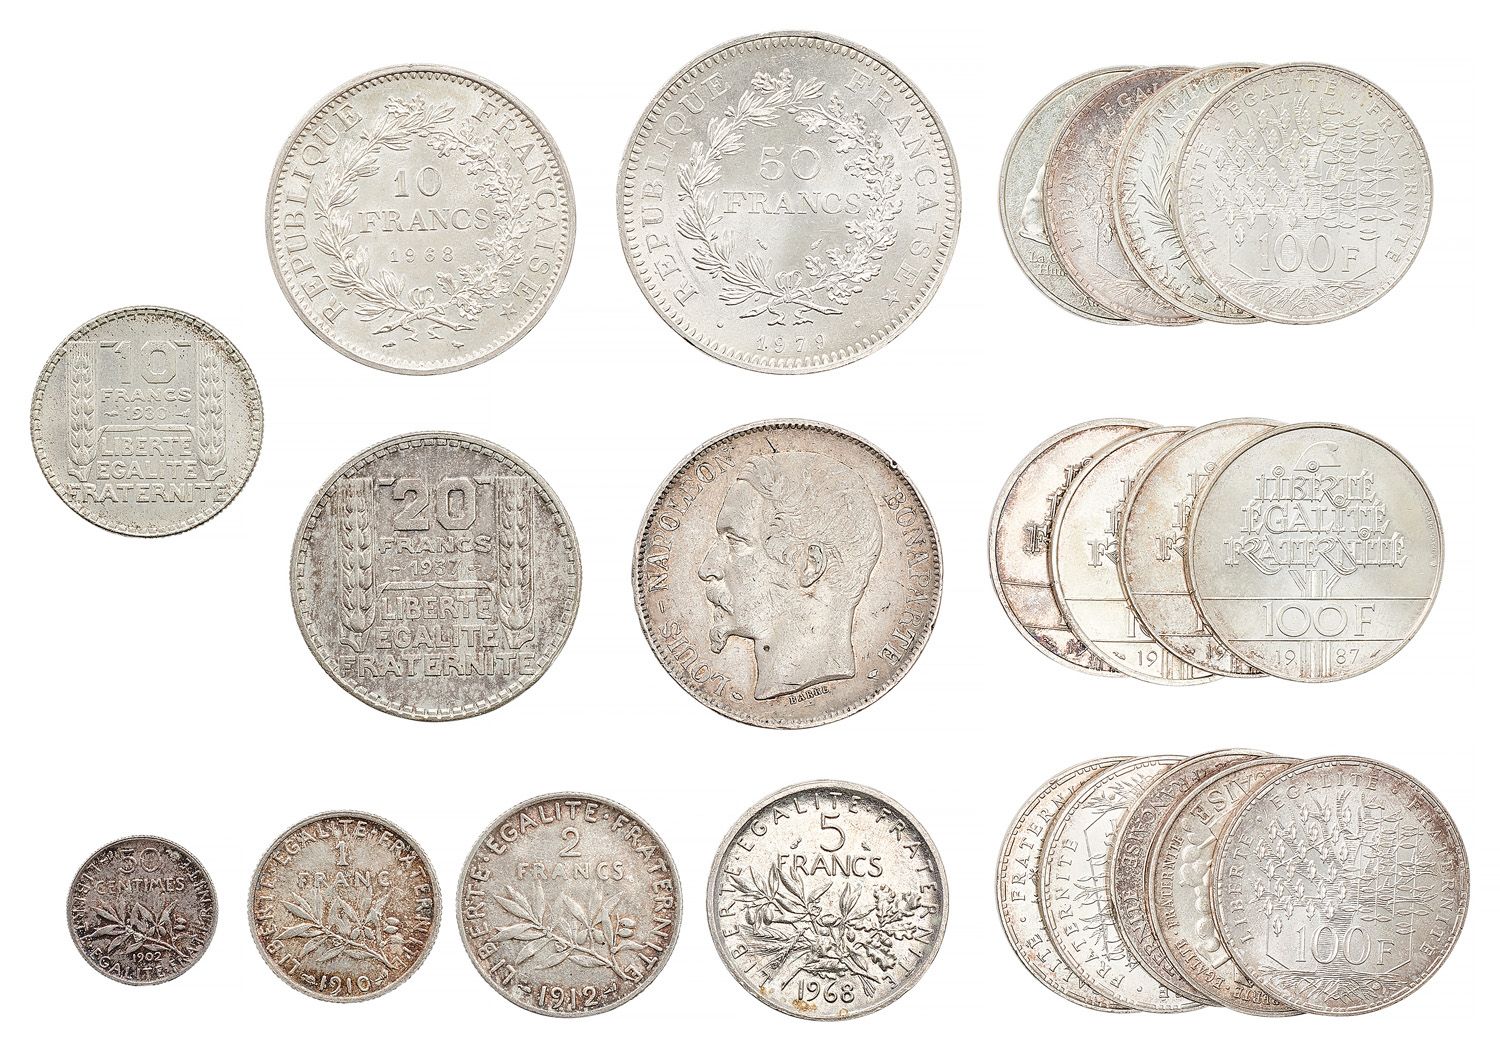 Lot de pièces en argent incluyendo monedas de 100 Fr, 50 Fr, 20 Fr, 10 Fr

Pb : &hellip;